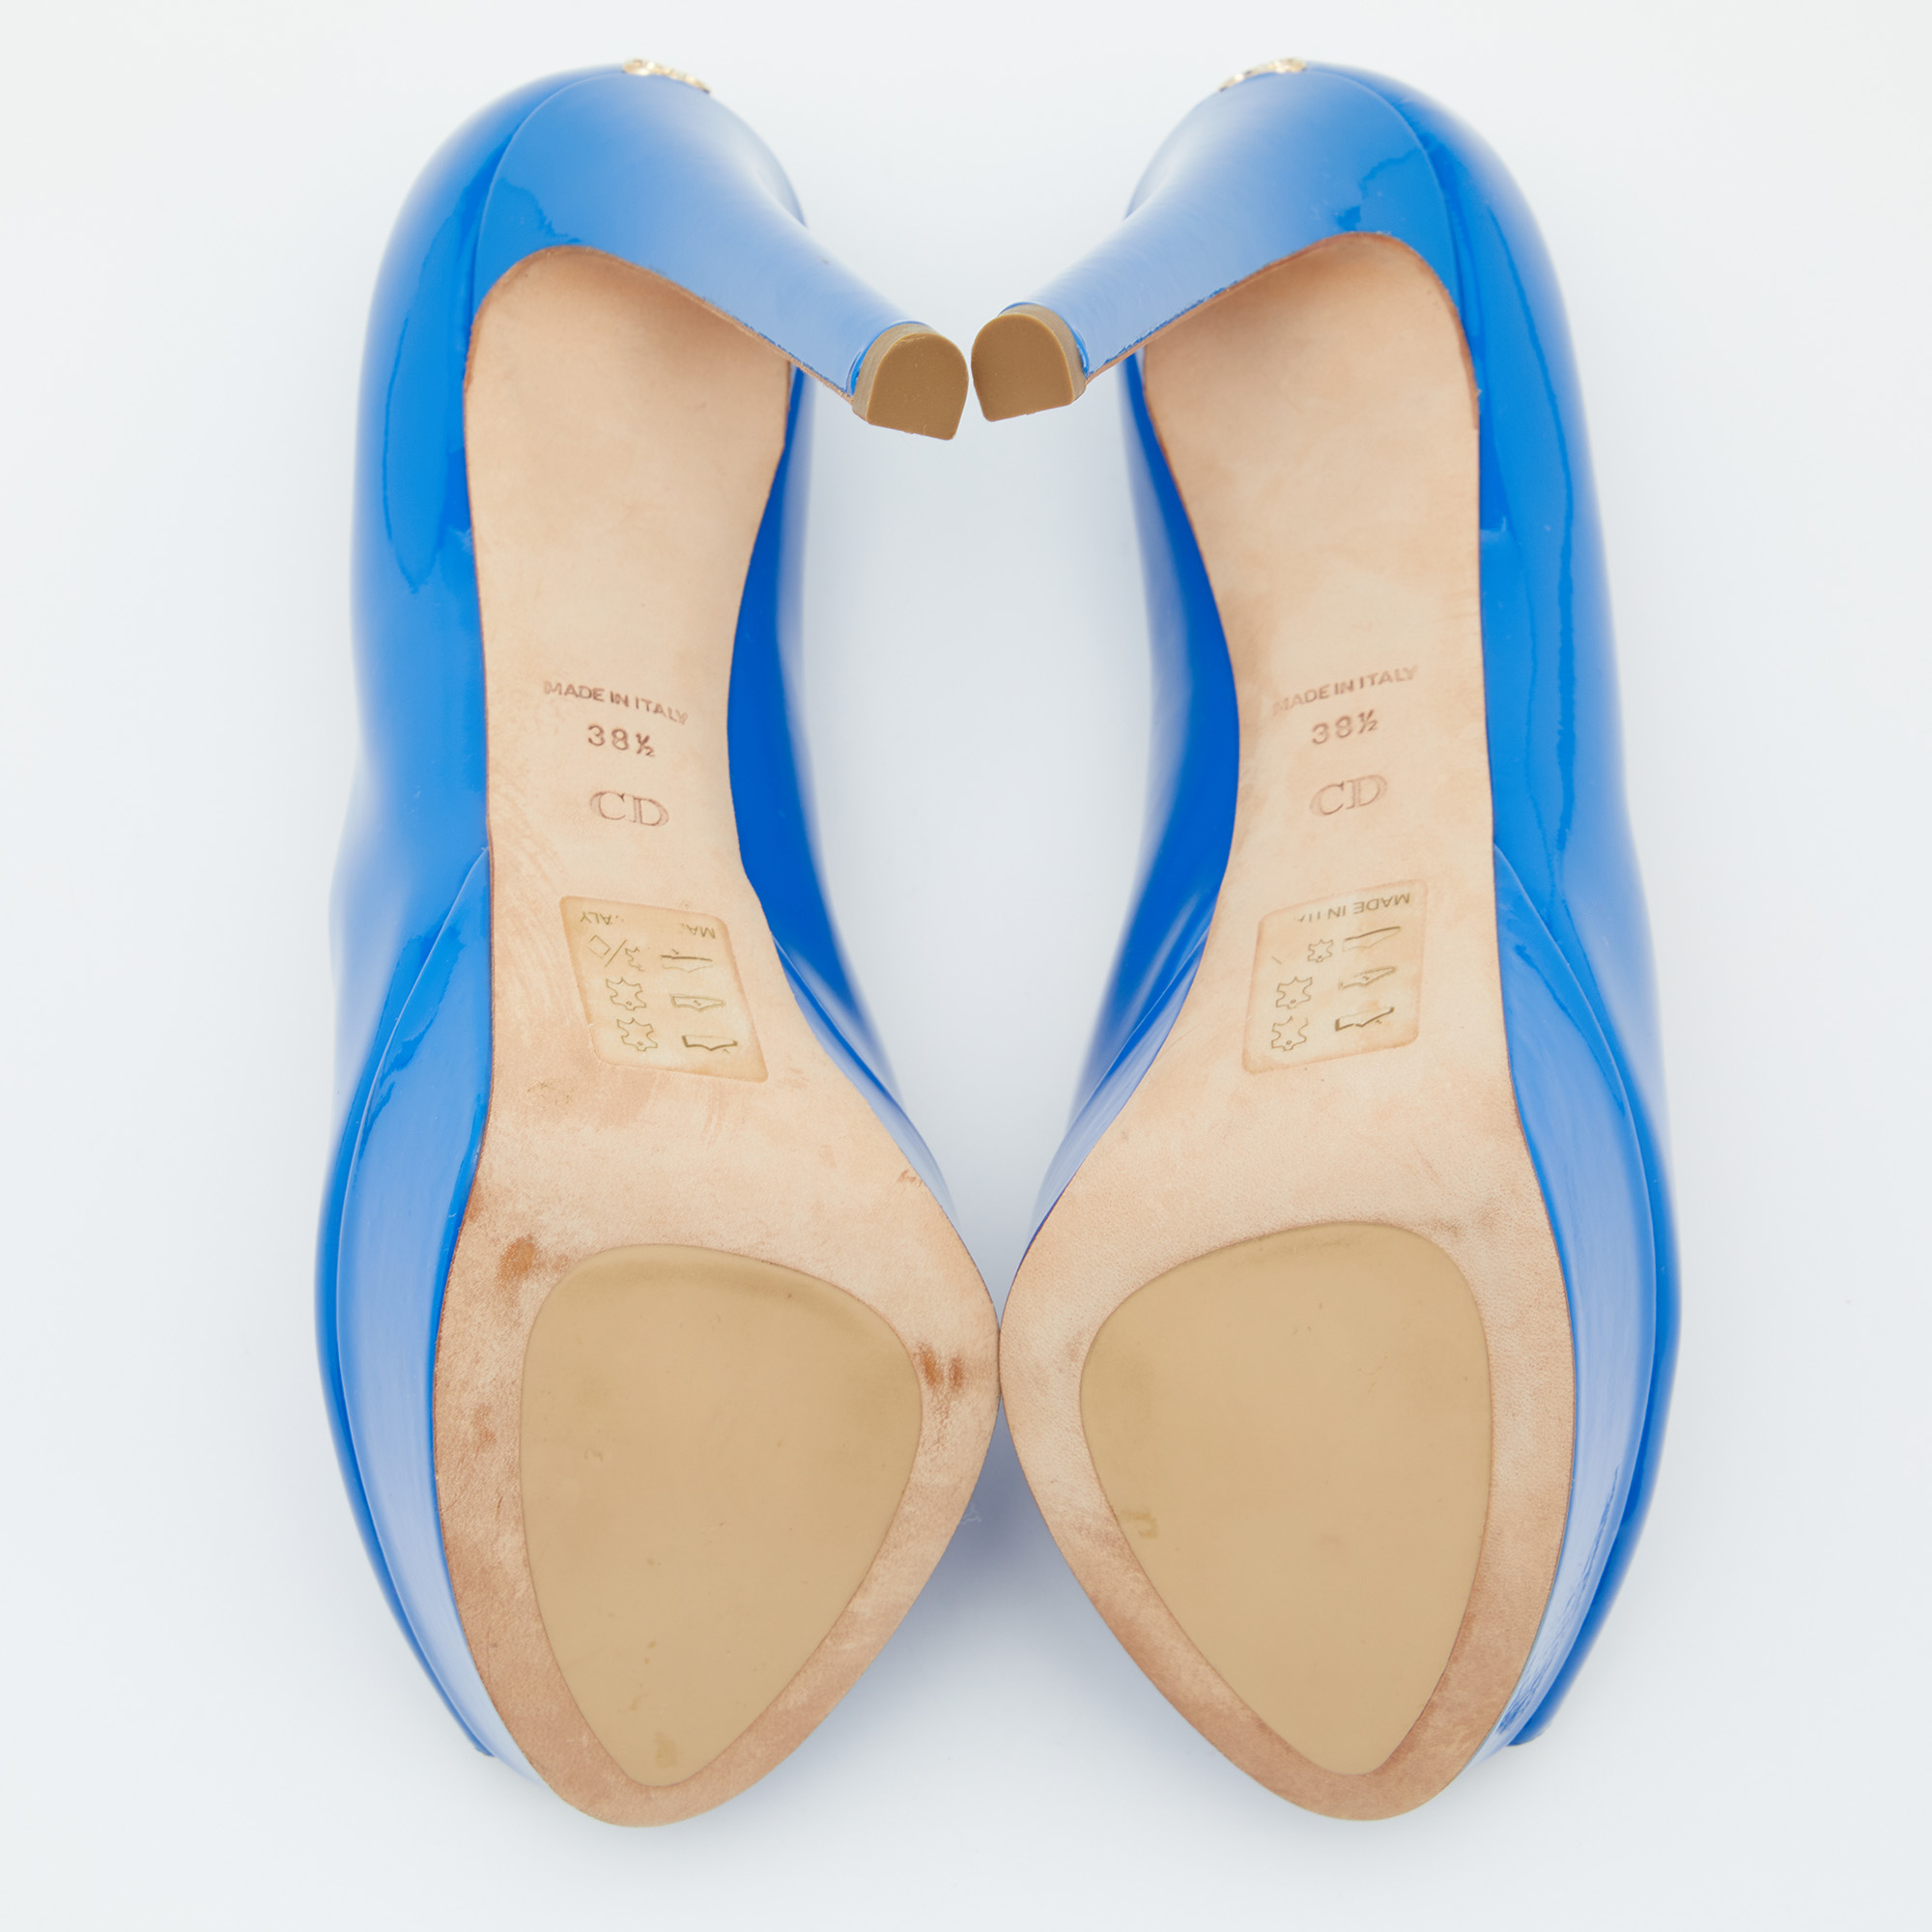 Dior Blue Patent Leather Miss Dior Peep Toe Platform Pumps Size 38.5